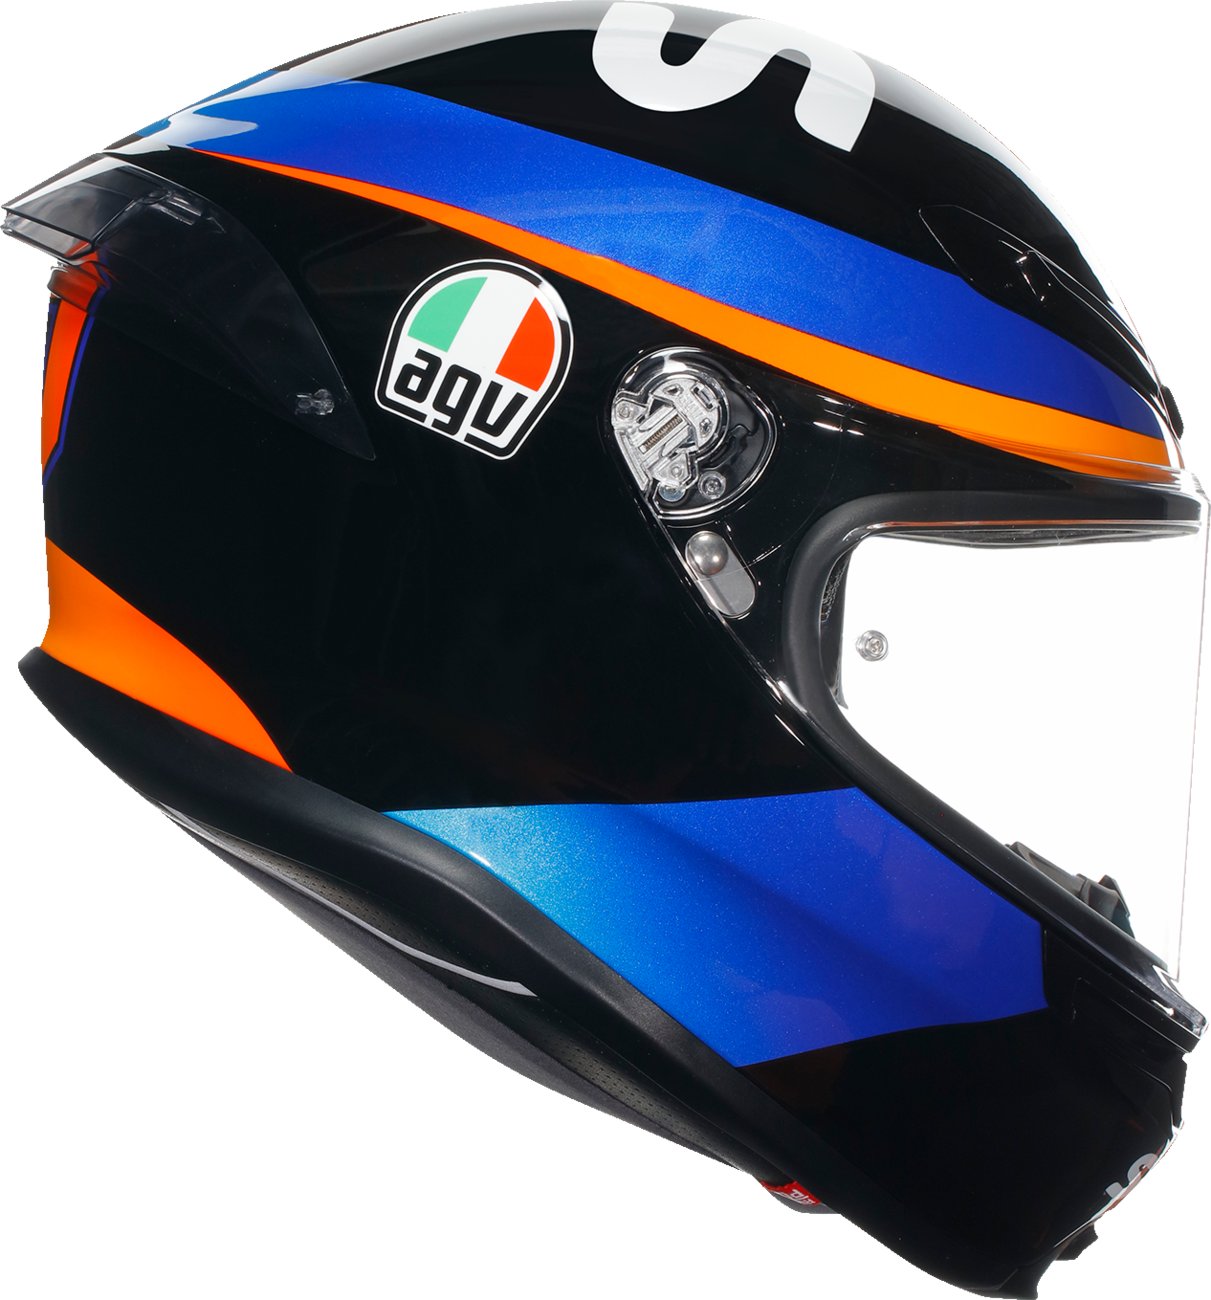 Casco AGV K6 S - Marini Sky Racing Team 2021 - Mediano 2118395002002M 